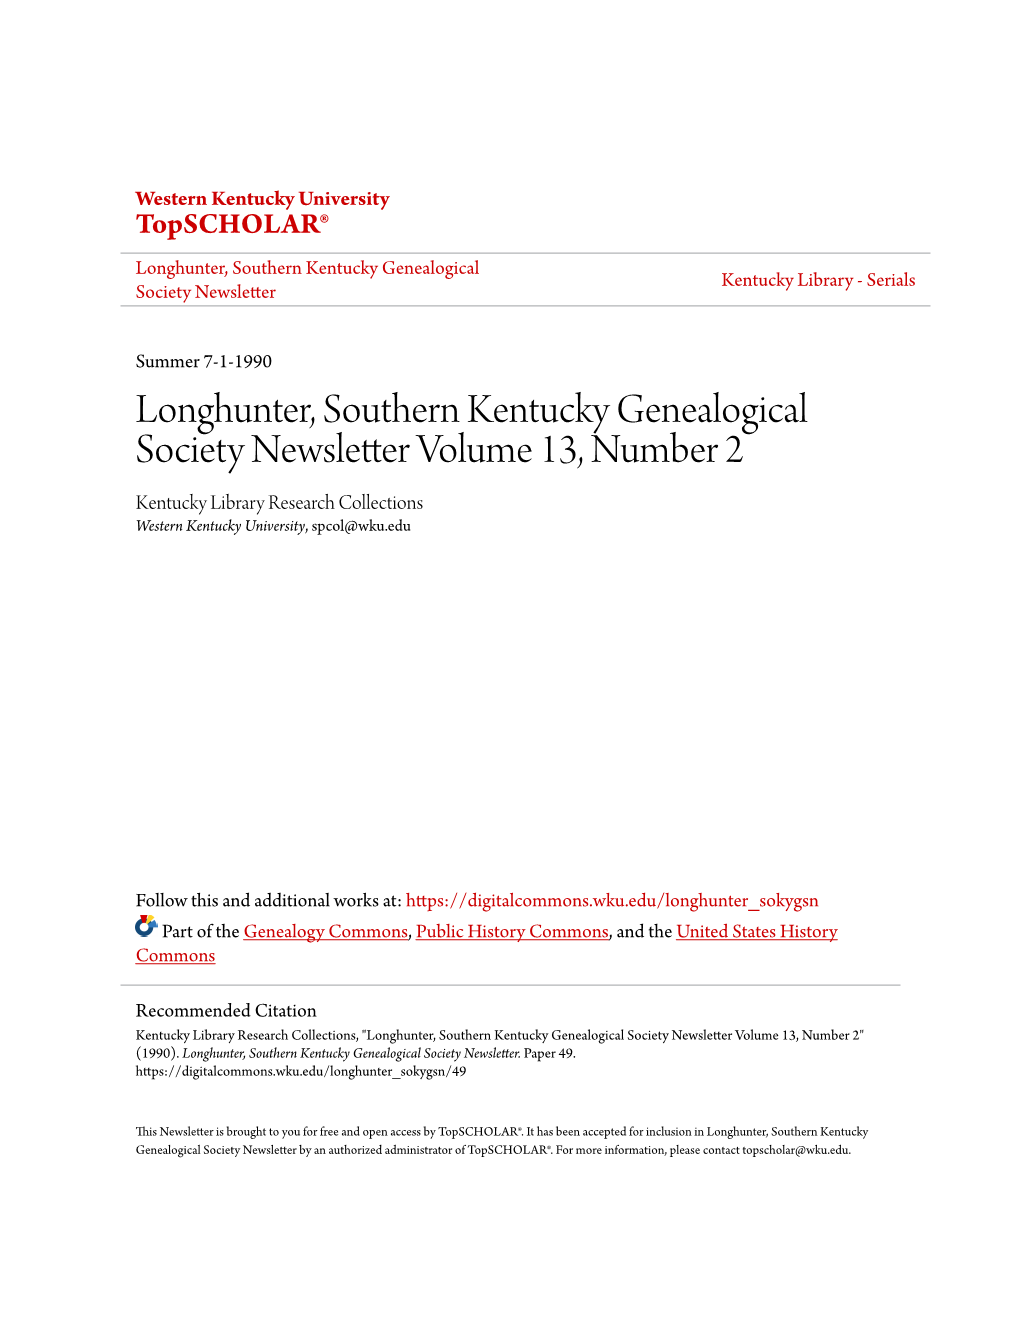 Longhunter, Southern Kentucky Genealogical Society Newsletter Volume 13, Number 2 Kentucky Library Research Collections Western Kentucky University, Spcol@Wku.Edu